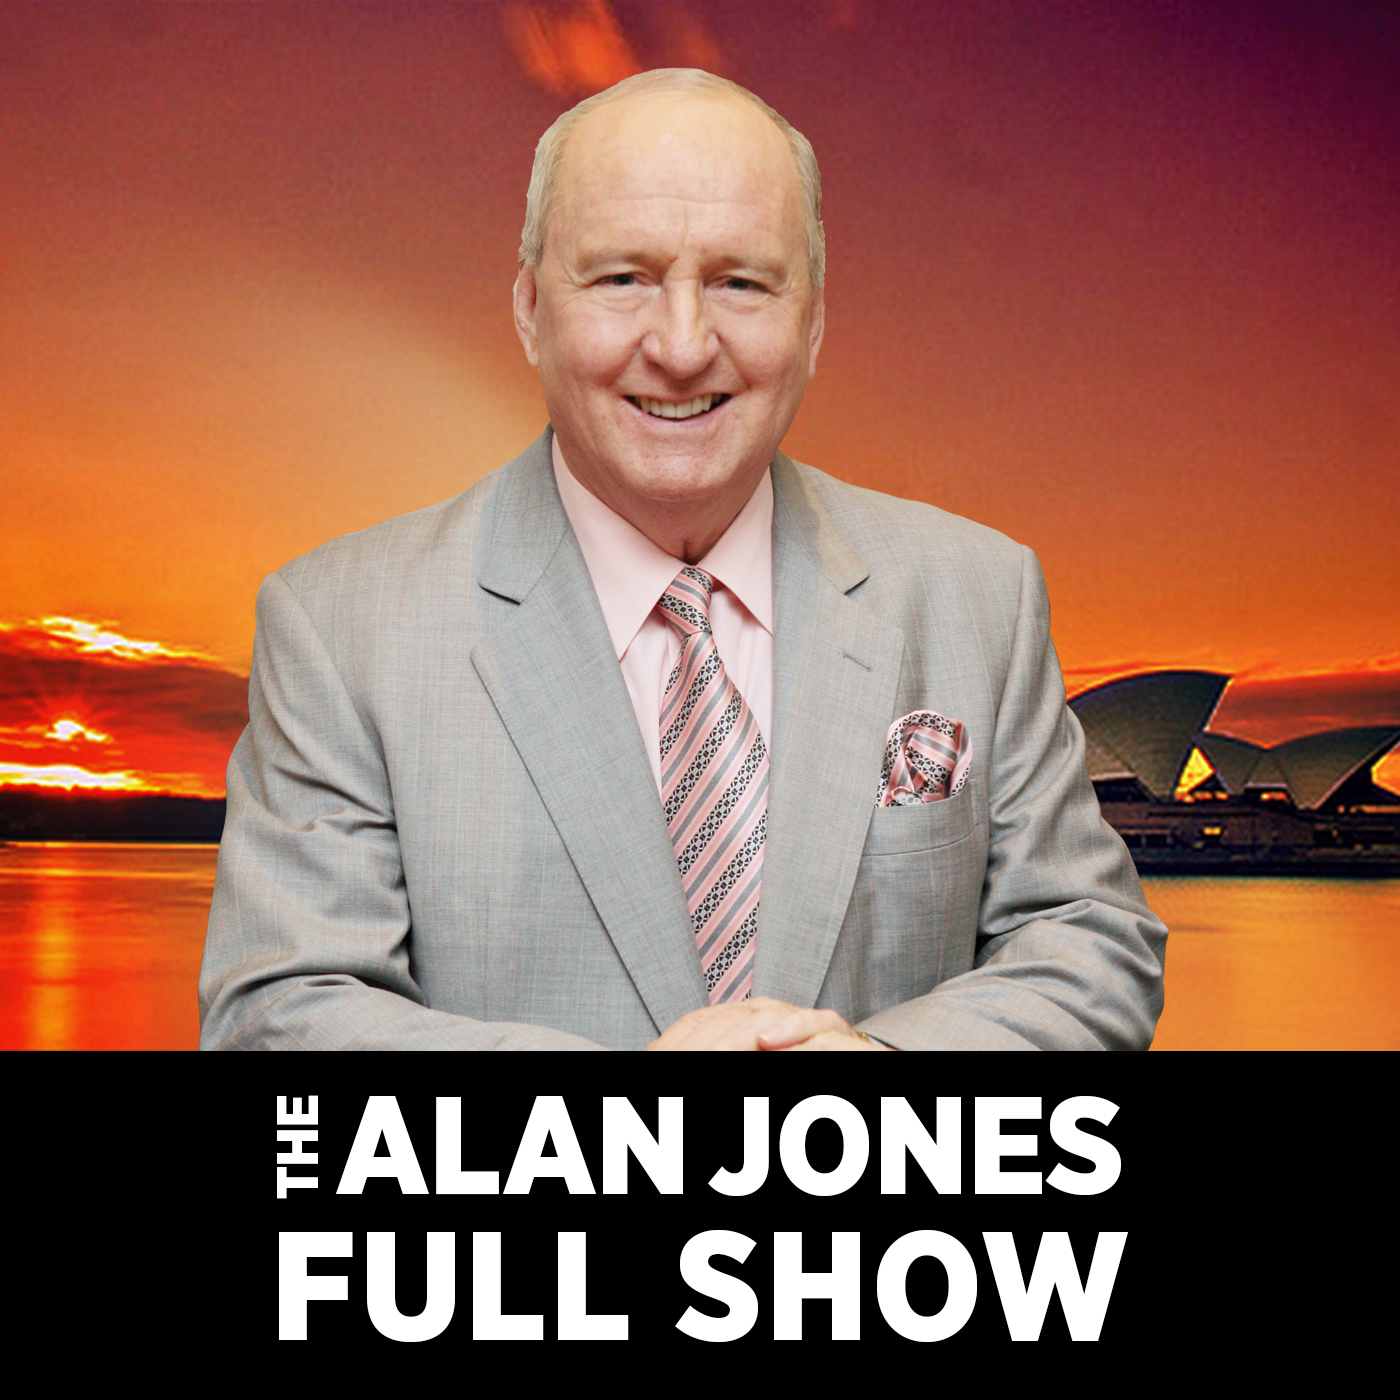 Alan Jones Full Show Podcast 13th March 2020